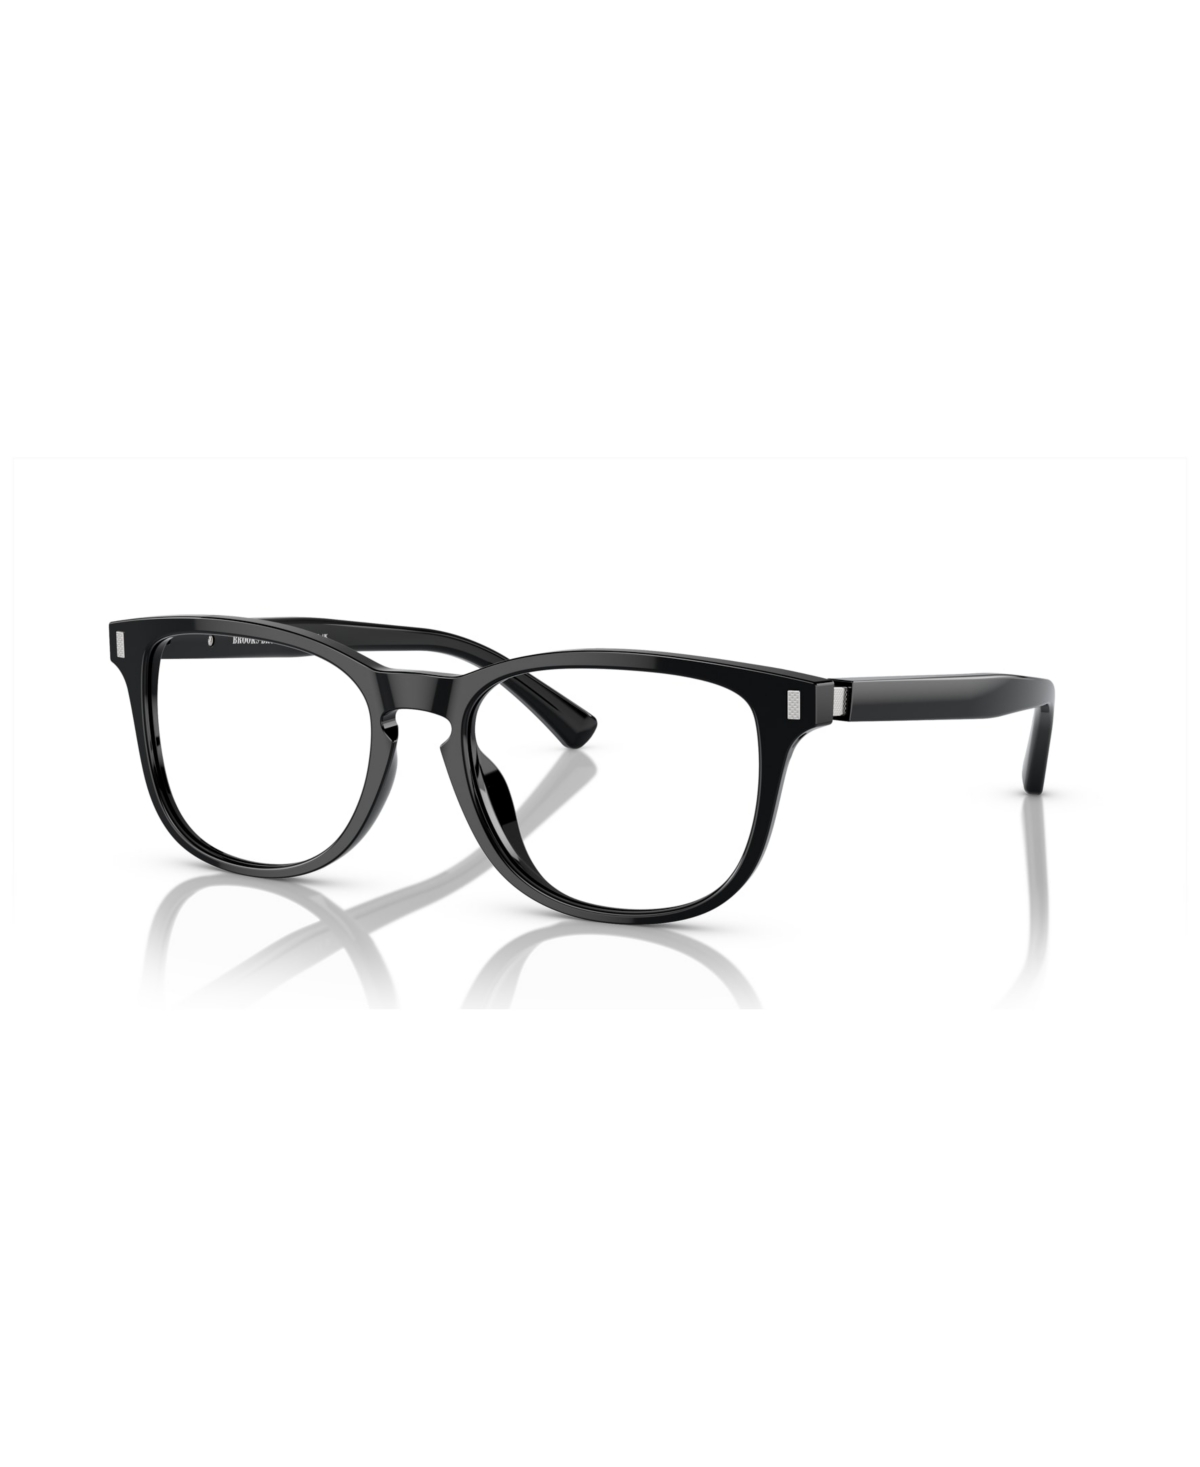 Men's Eyeglasses, BB2060U - Shiny Black Bio